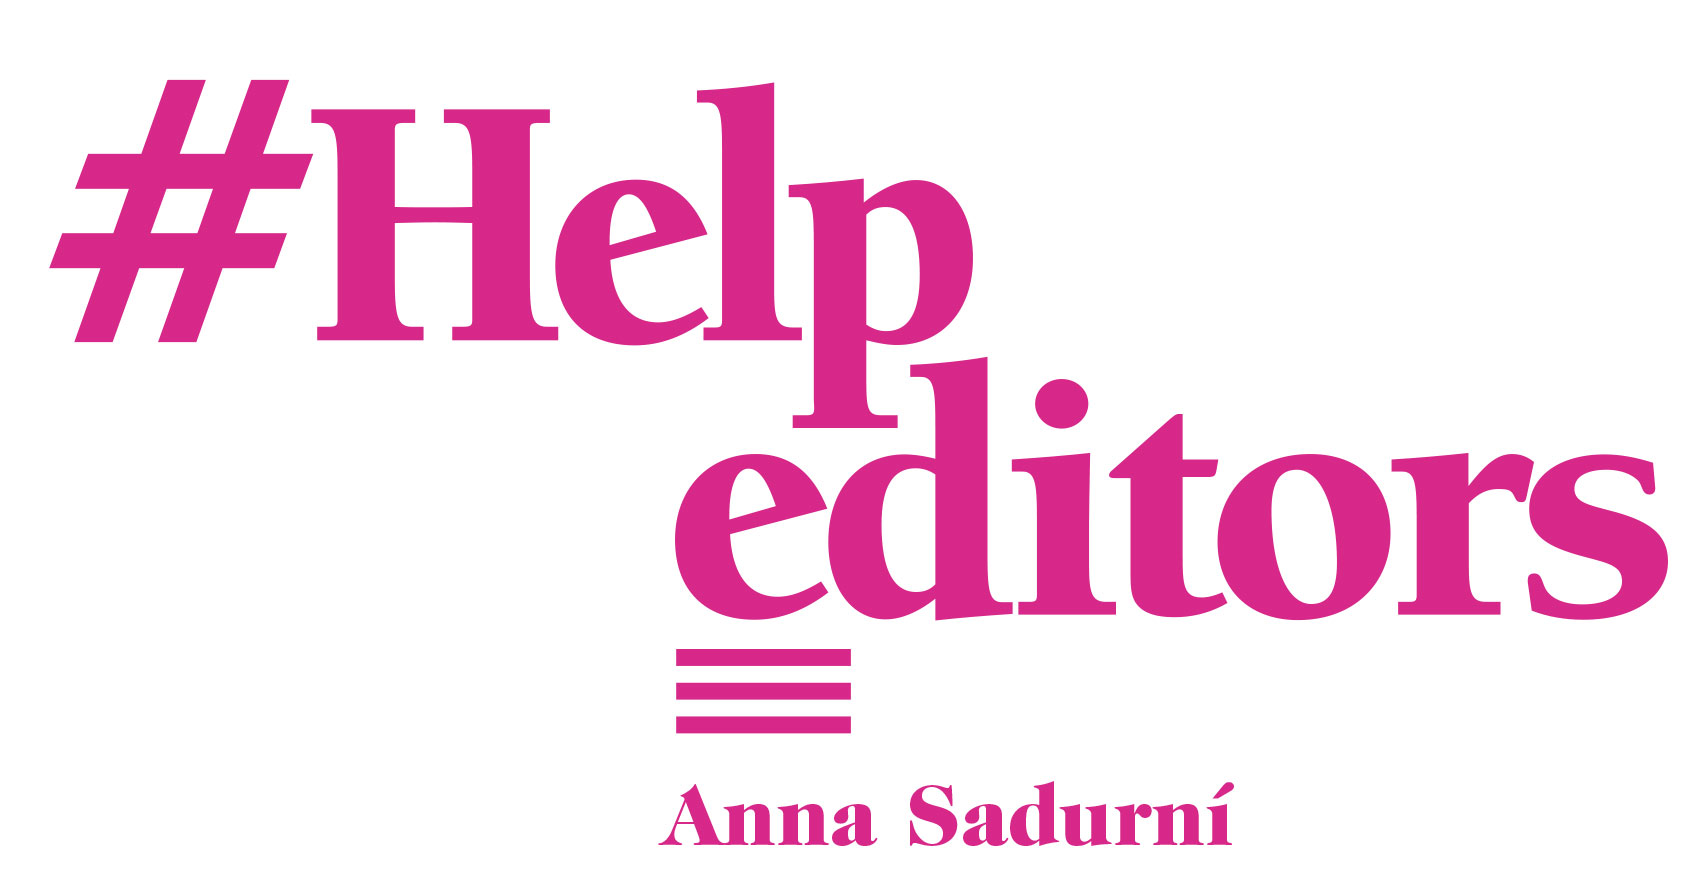 Help Editors Logo